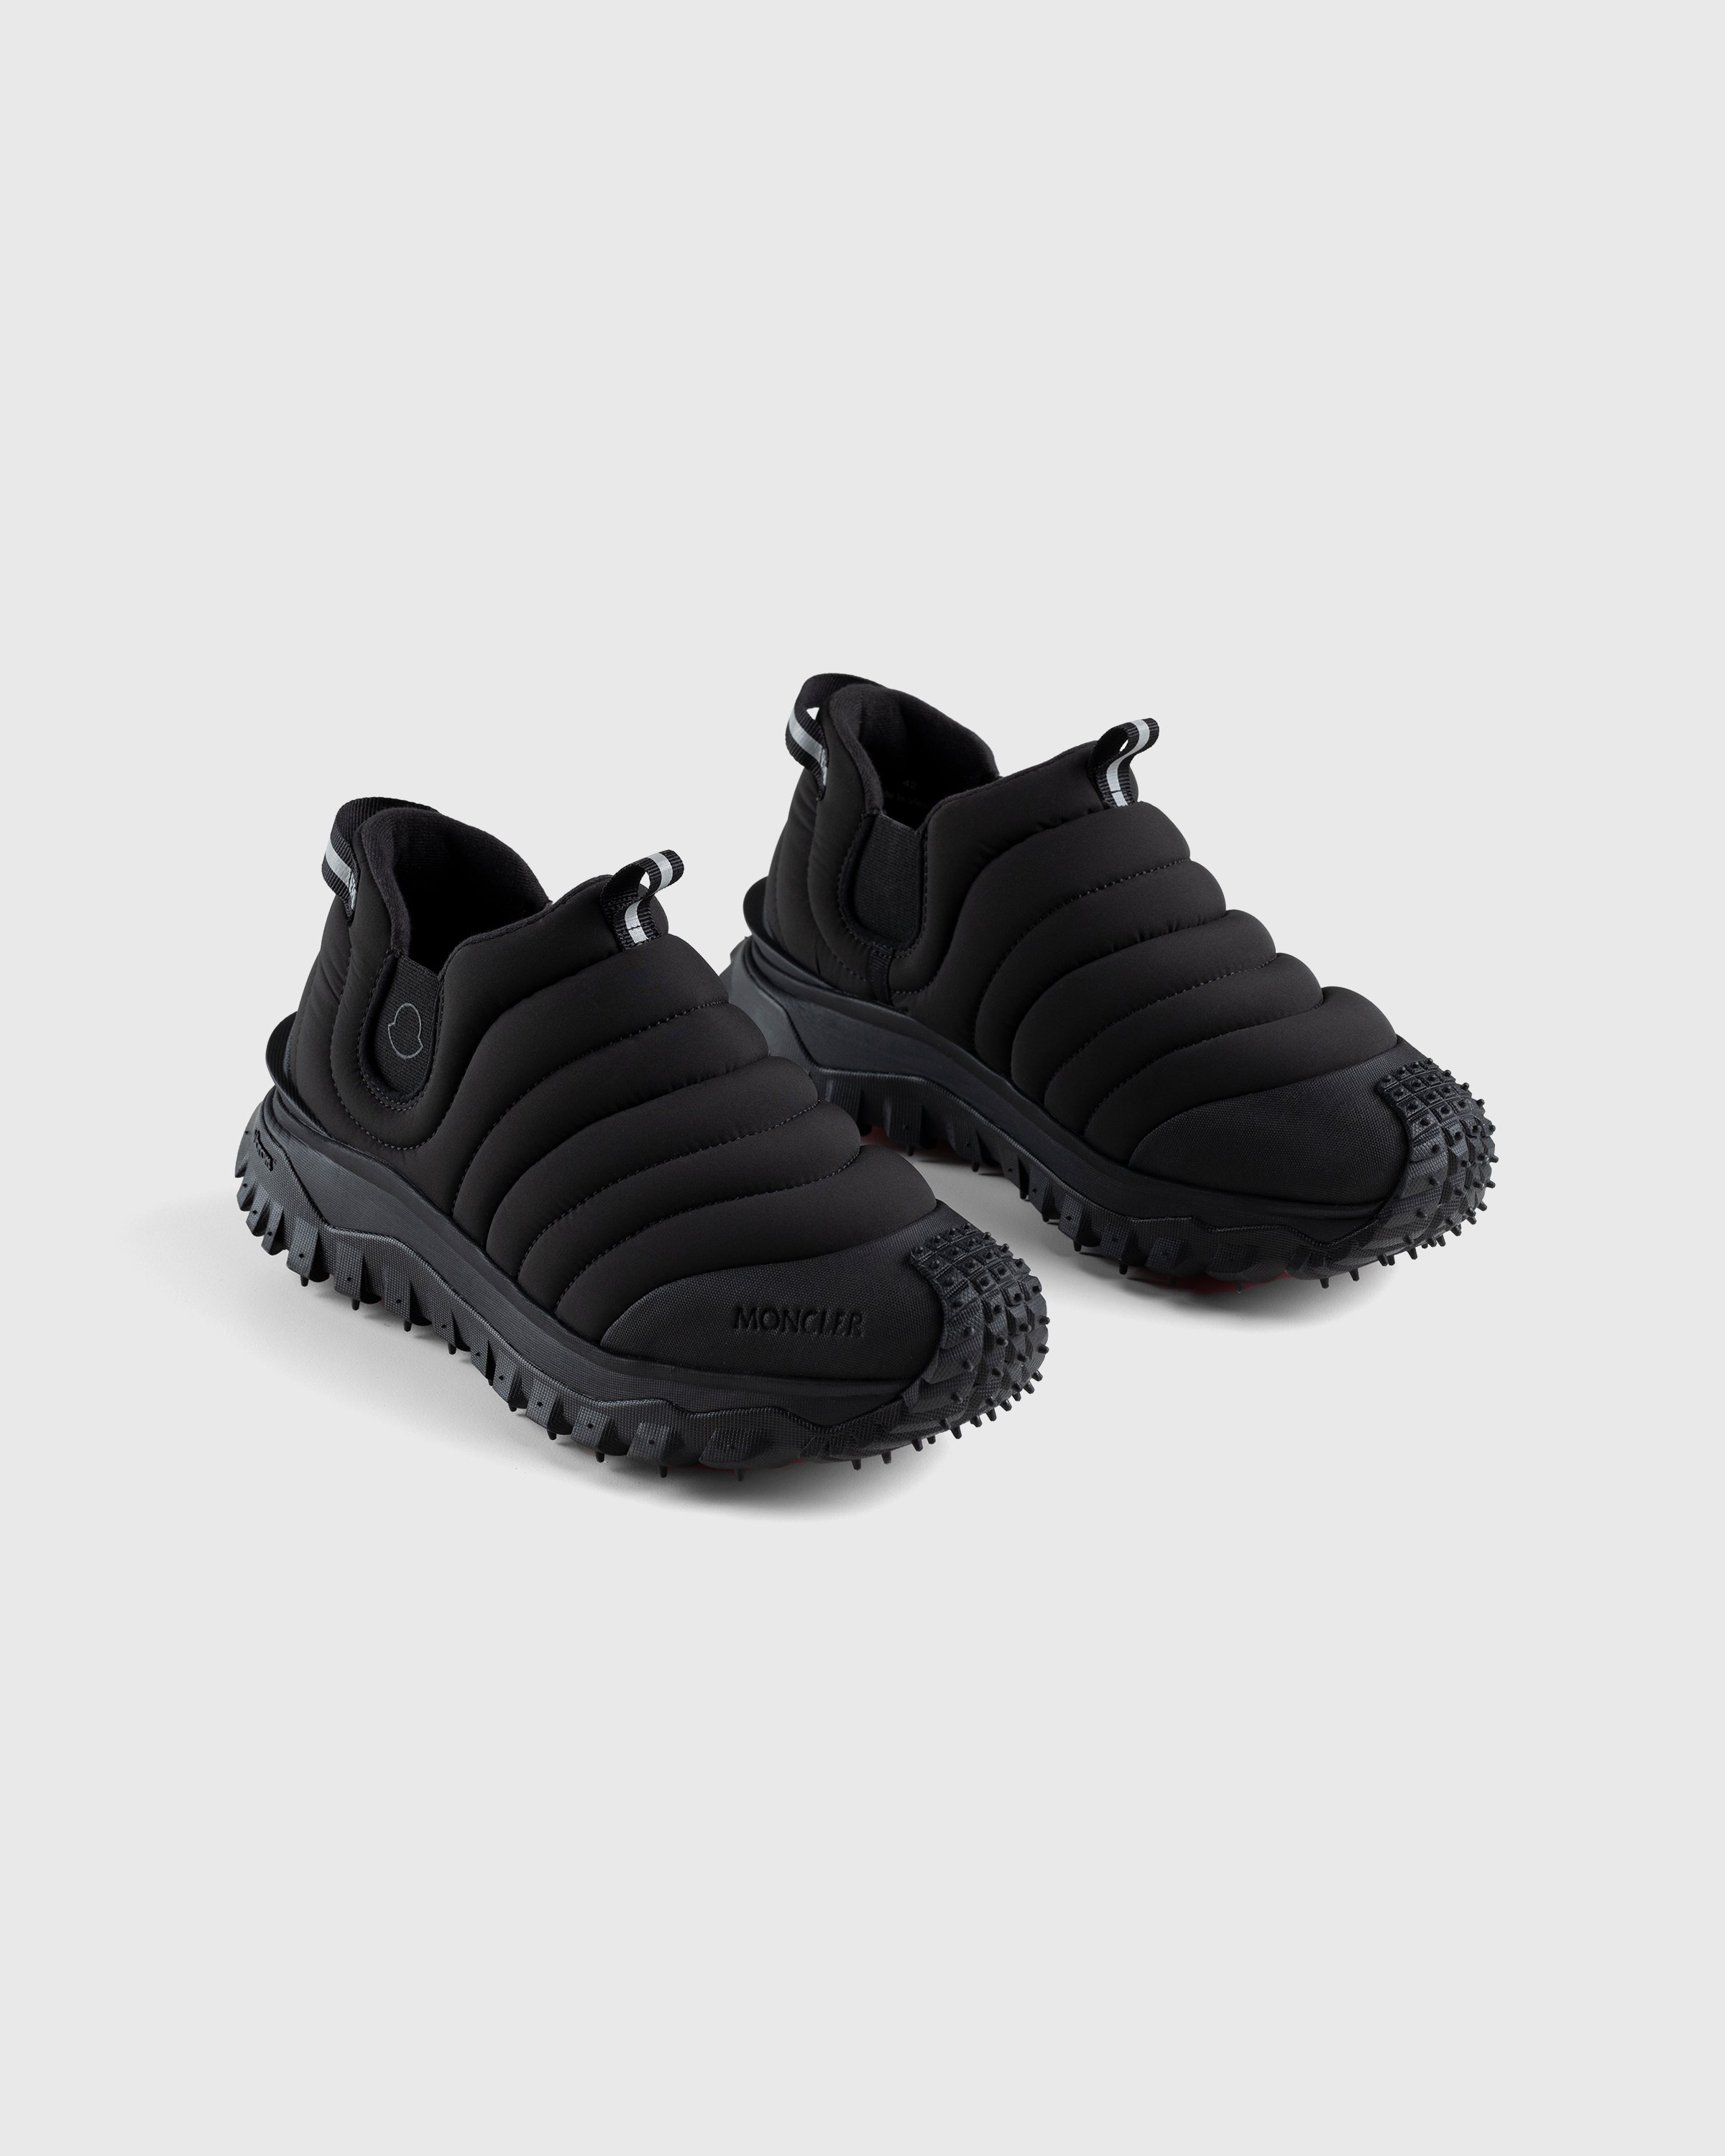 Moncler - Après Trail Sneakers Black - Footwear - Black - Image 3